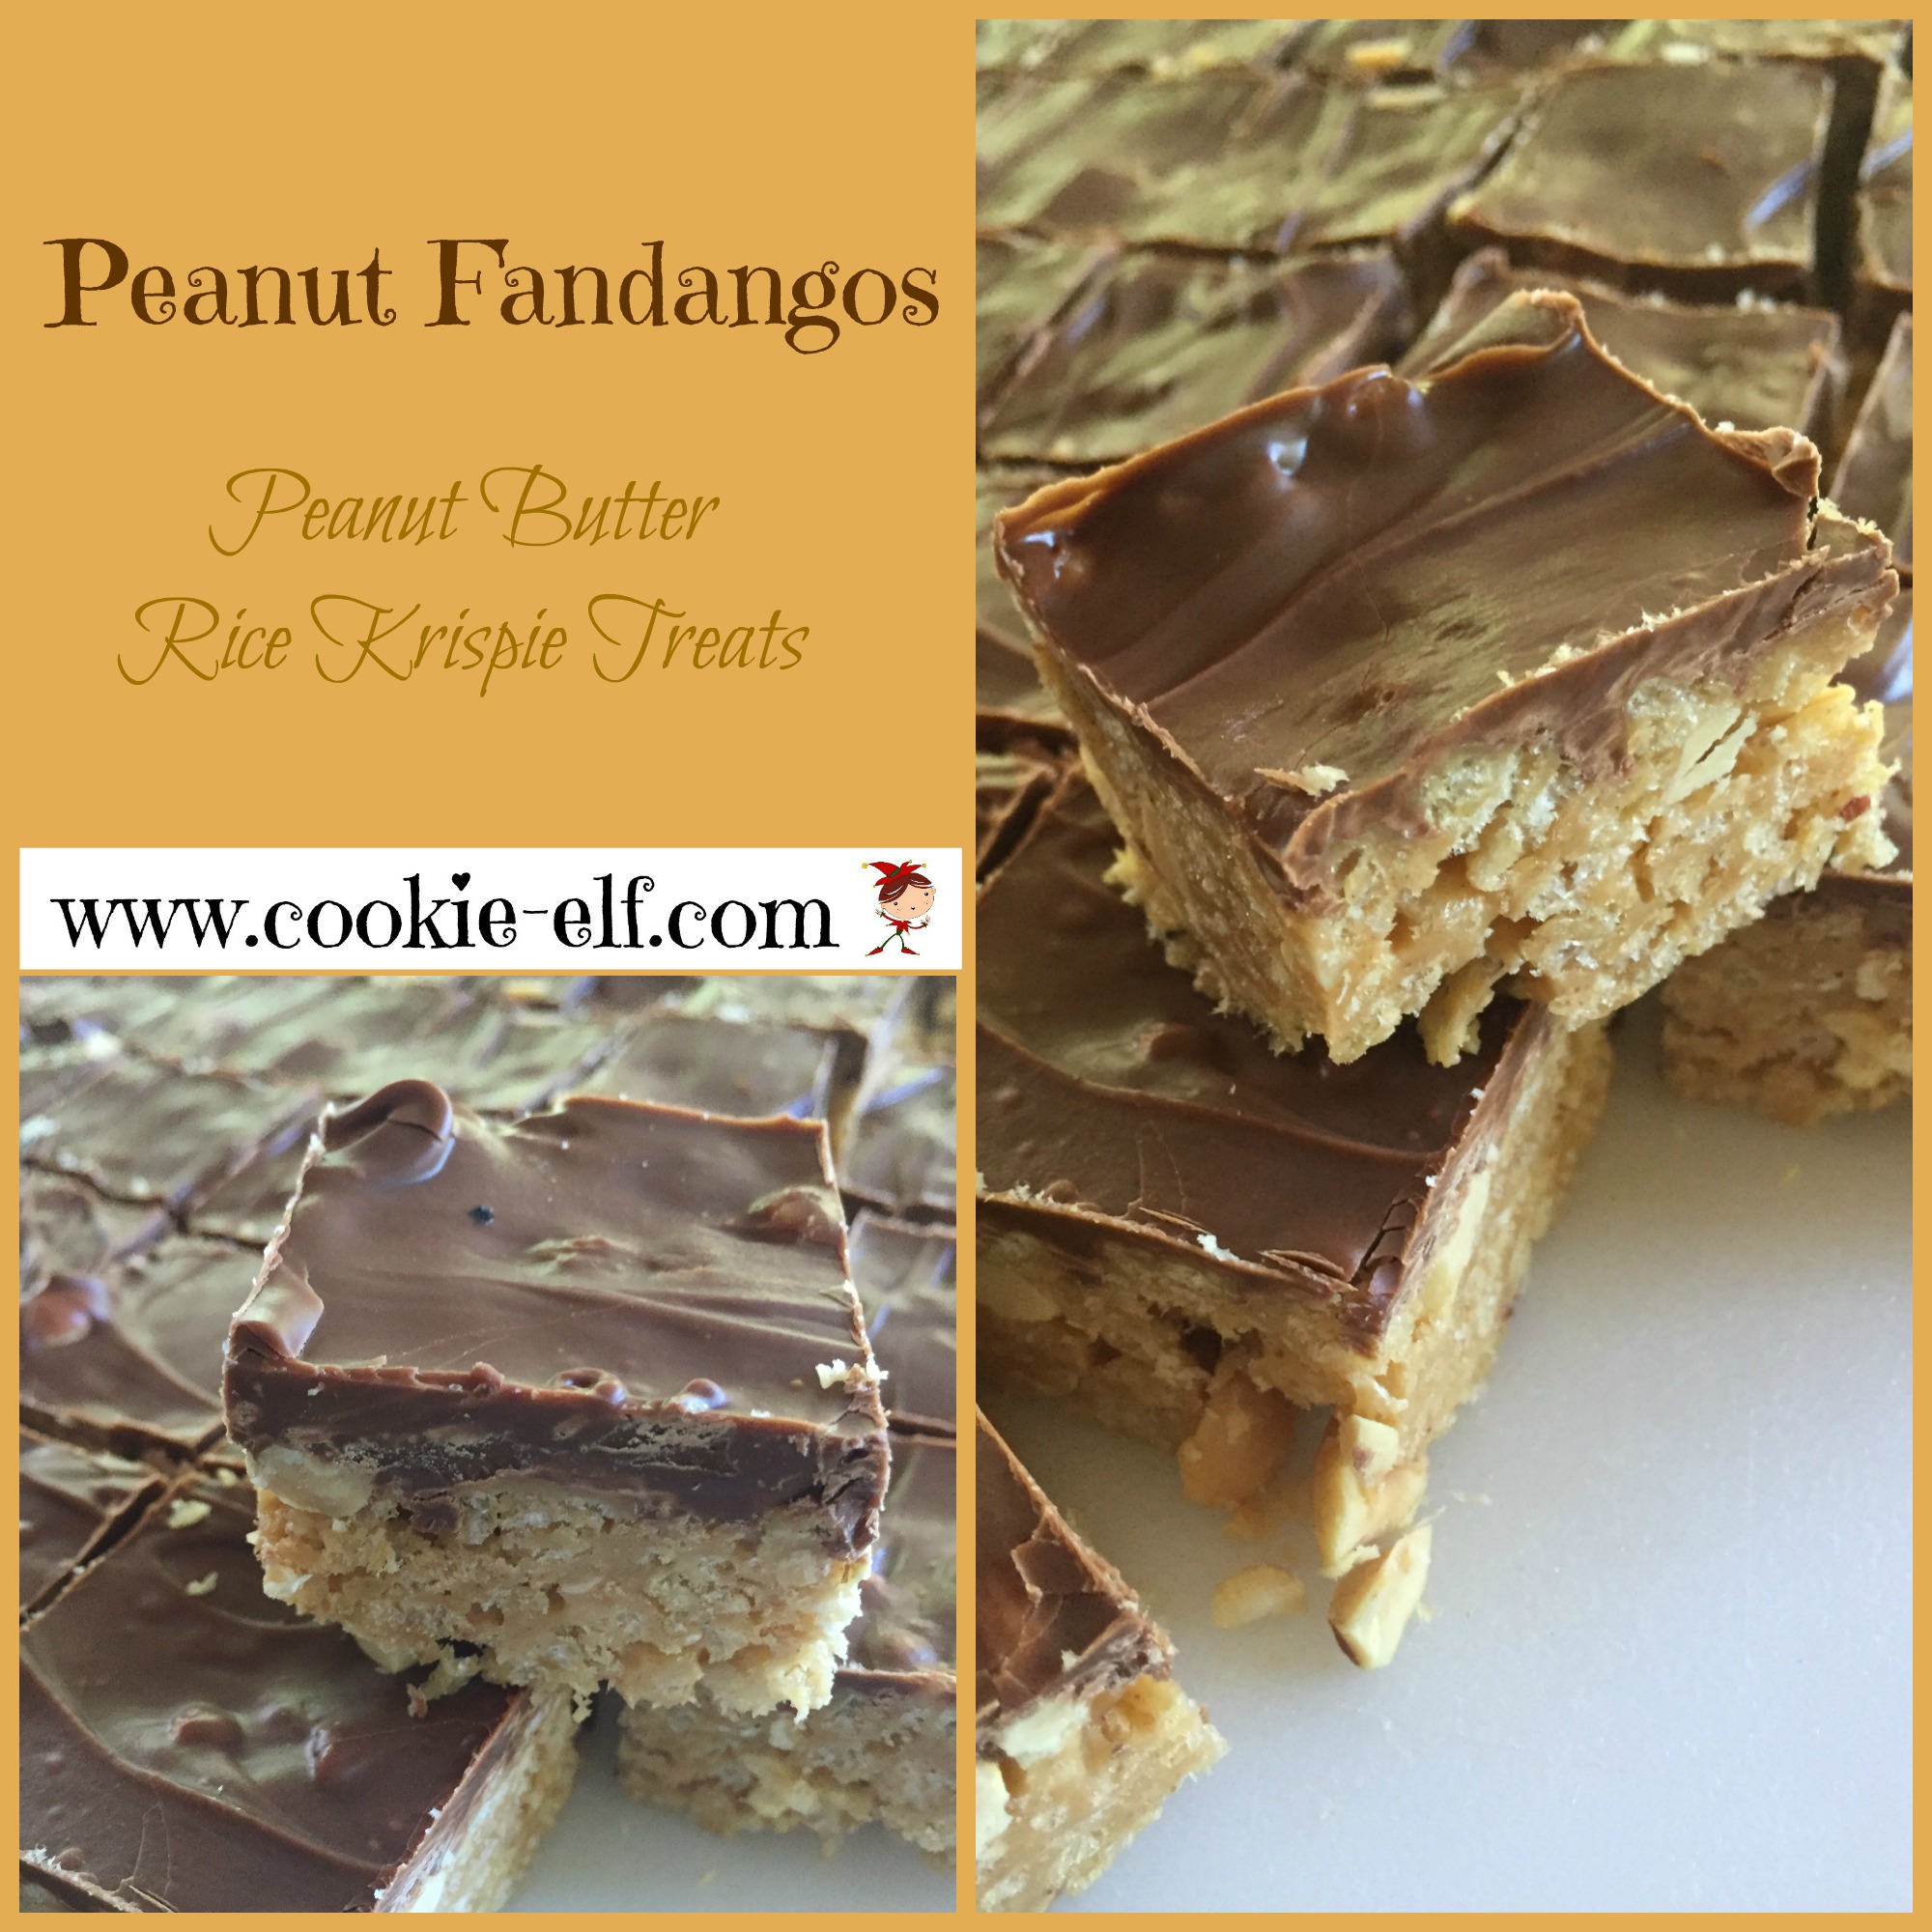 Peanut Fandangos - a Peanut Butter Rice Krispies Treat Variation from The Cookie Elf